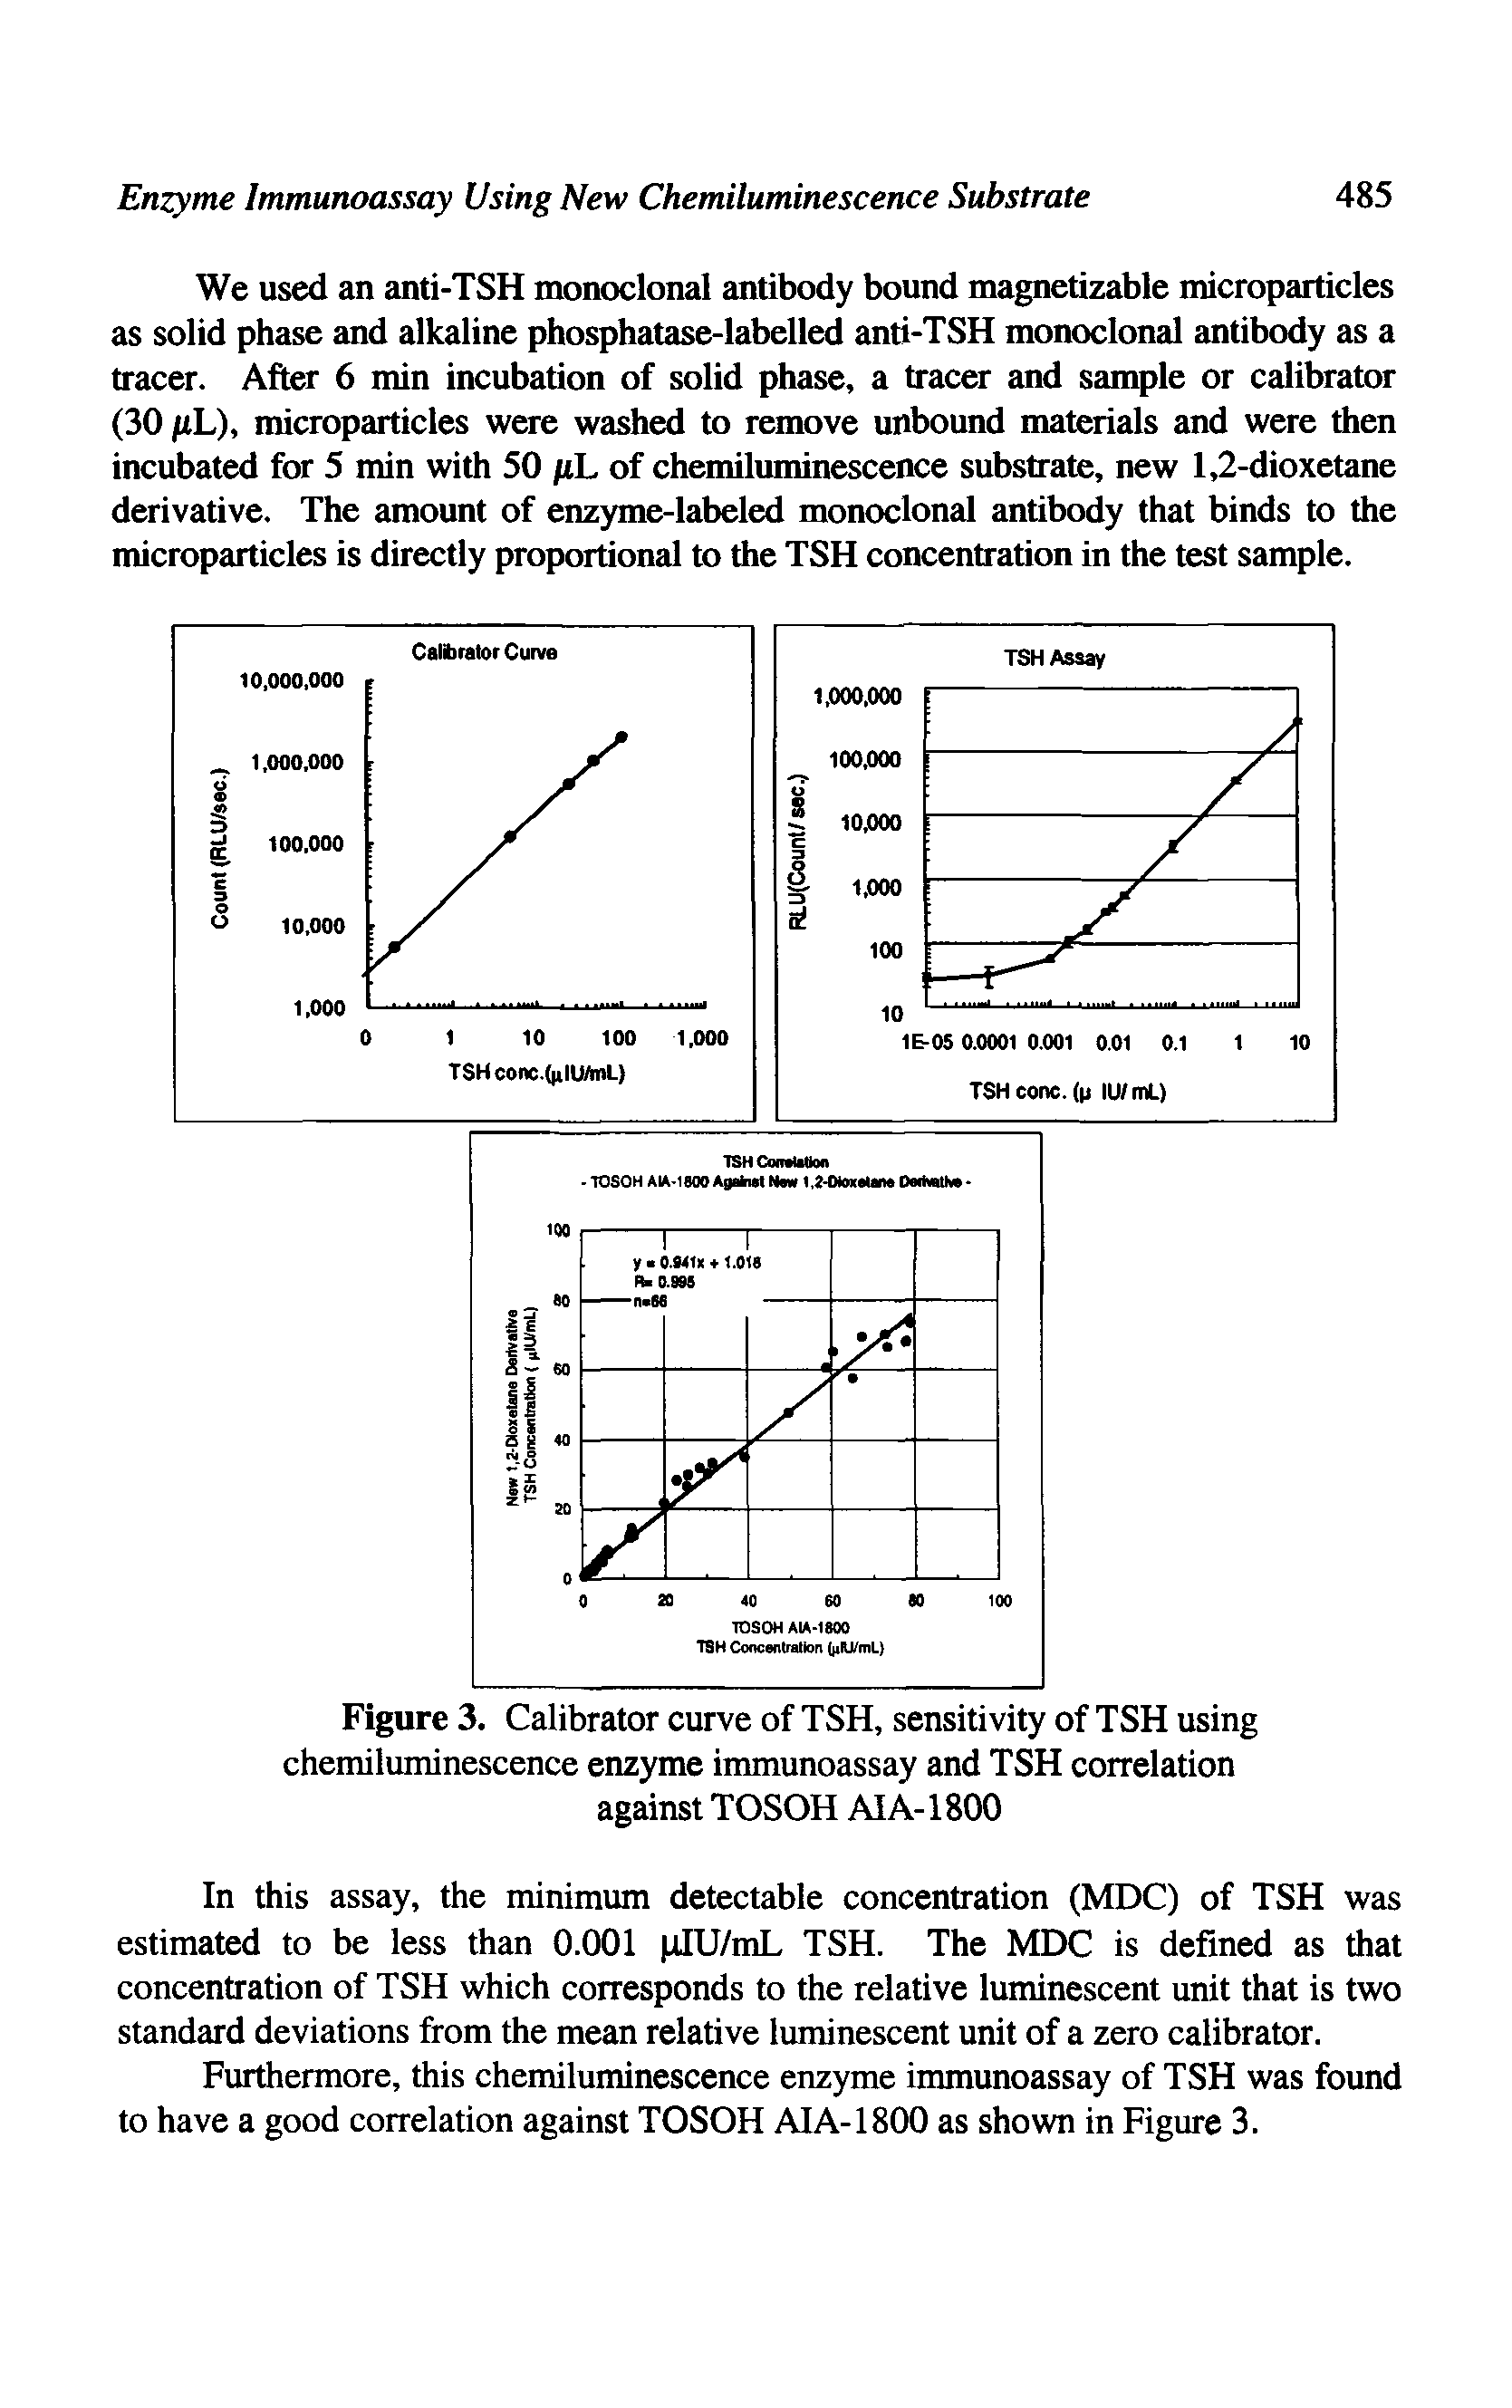 Figure 3. Calibrator curve of TSH, sensitivity of TSH using chemiluminescence enzyme immunoassay and TSH correlation against TOSOH AIA-1800...